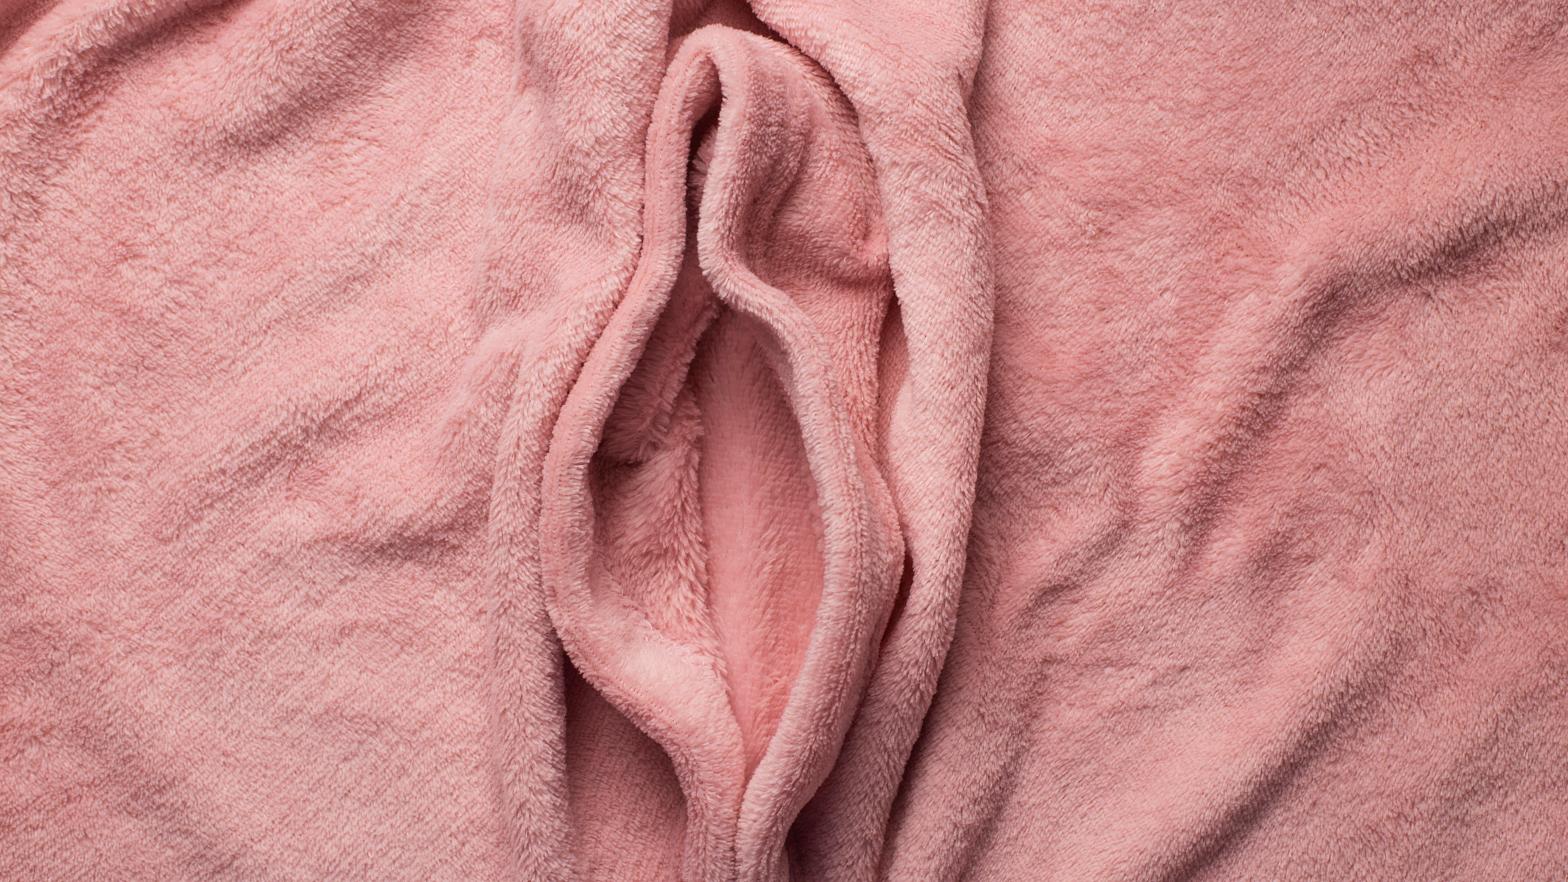 Folded pink cloth (Image: JpegPhotographer, Shutterstock)